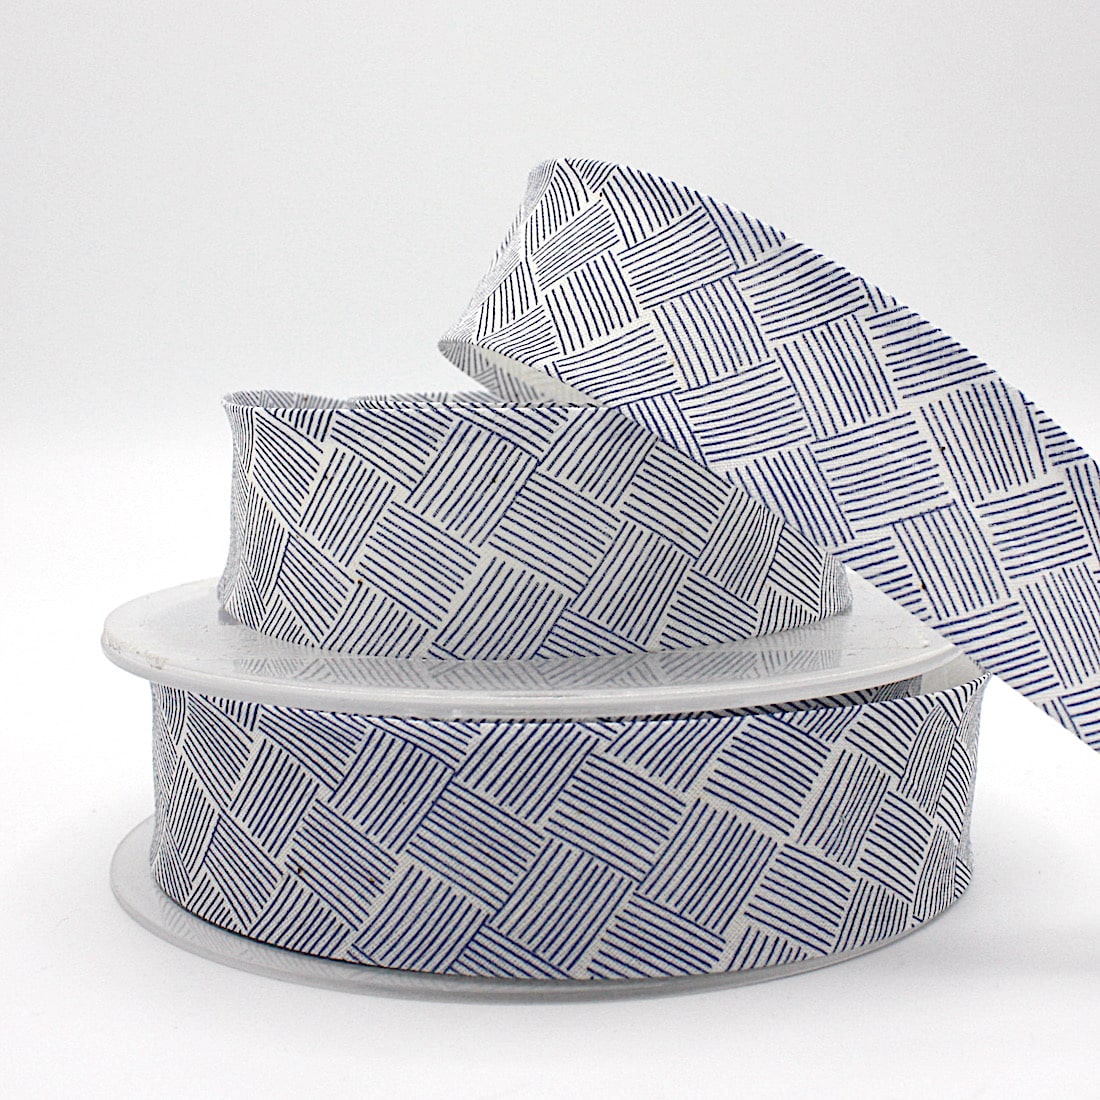 25m roll of Basket Weave Bias Binding Tape with 30mm width in Blue